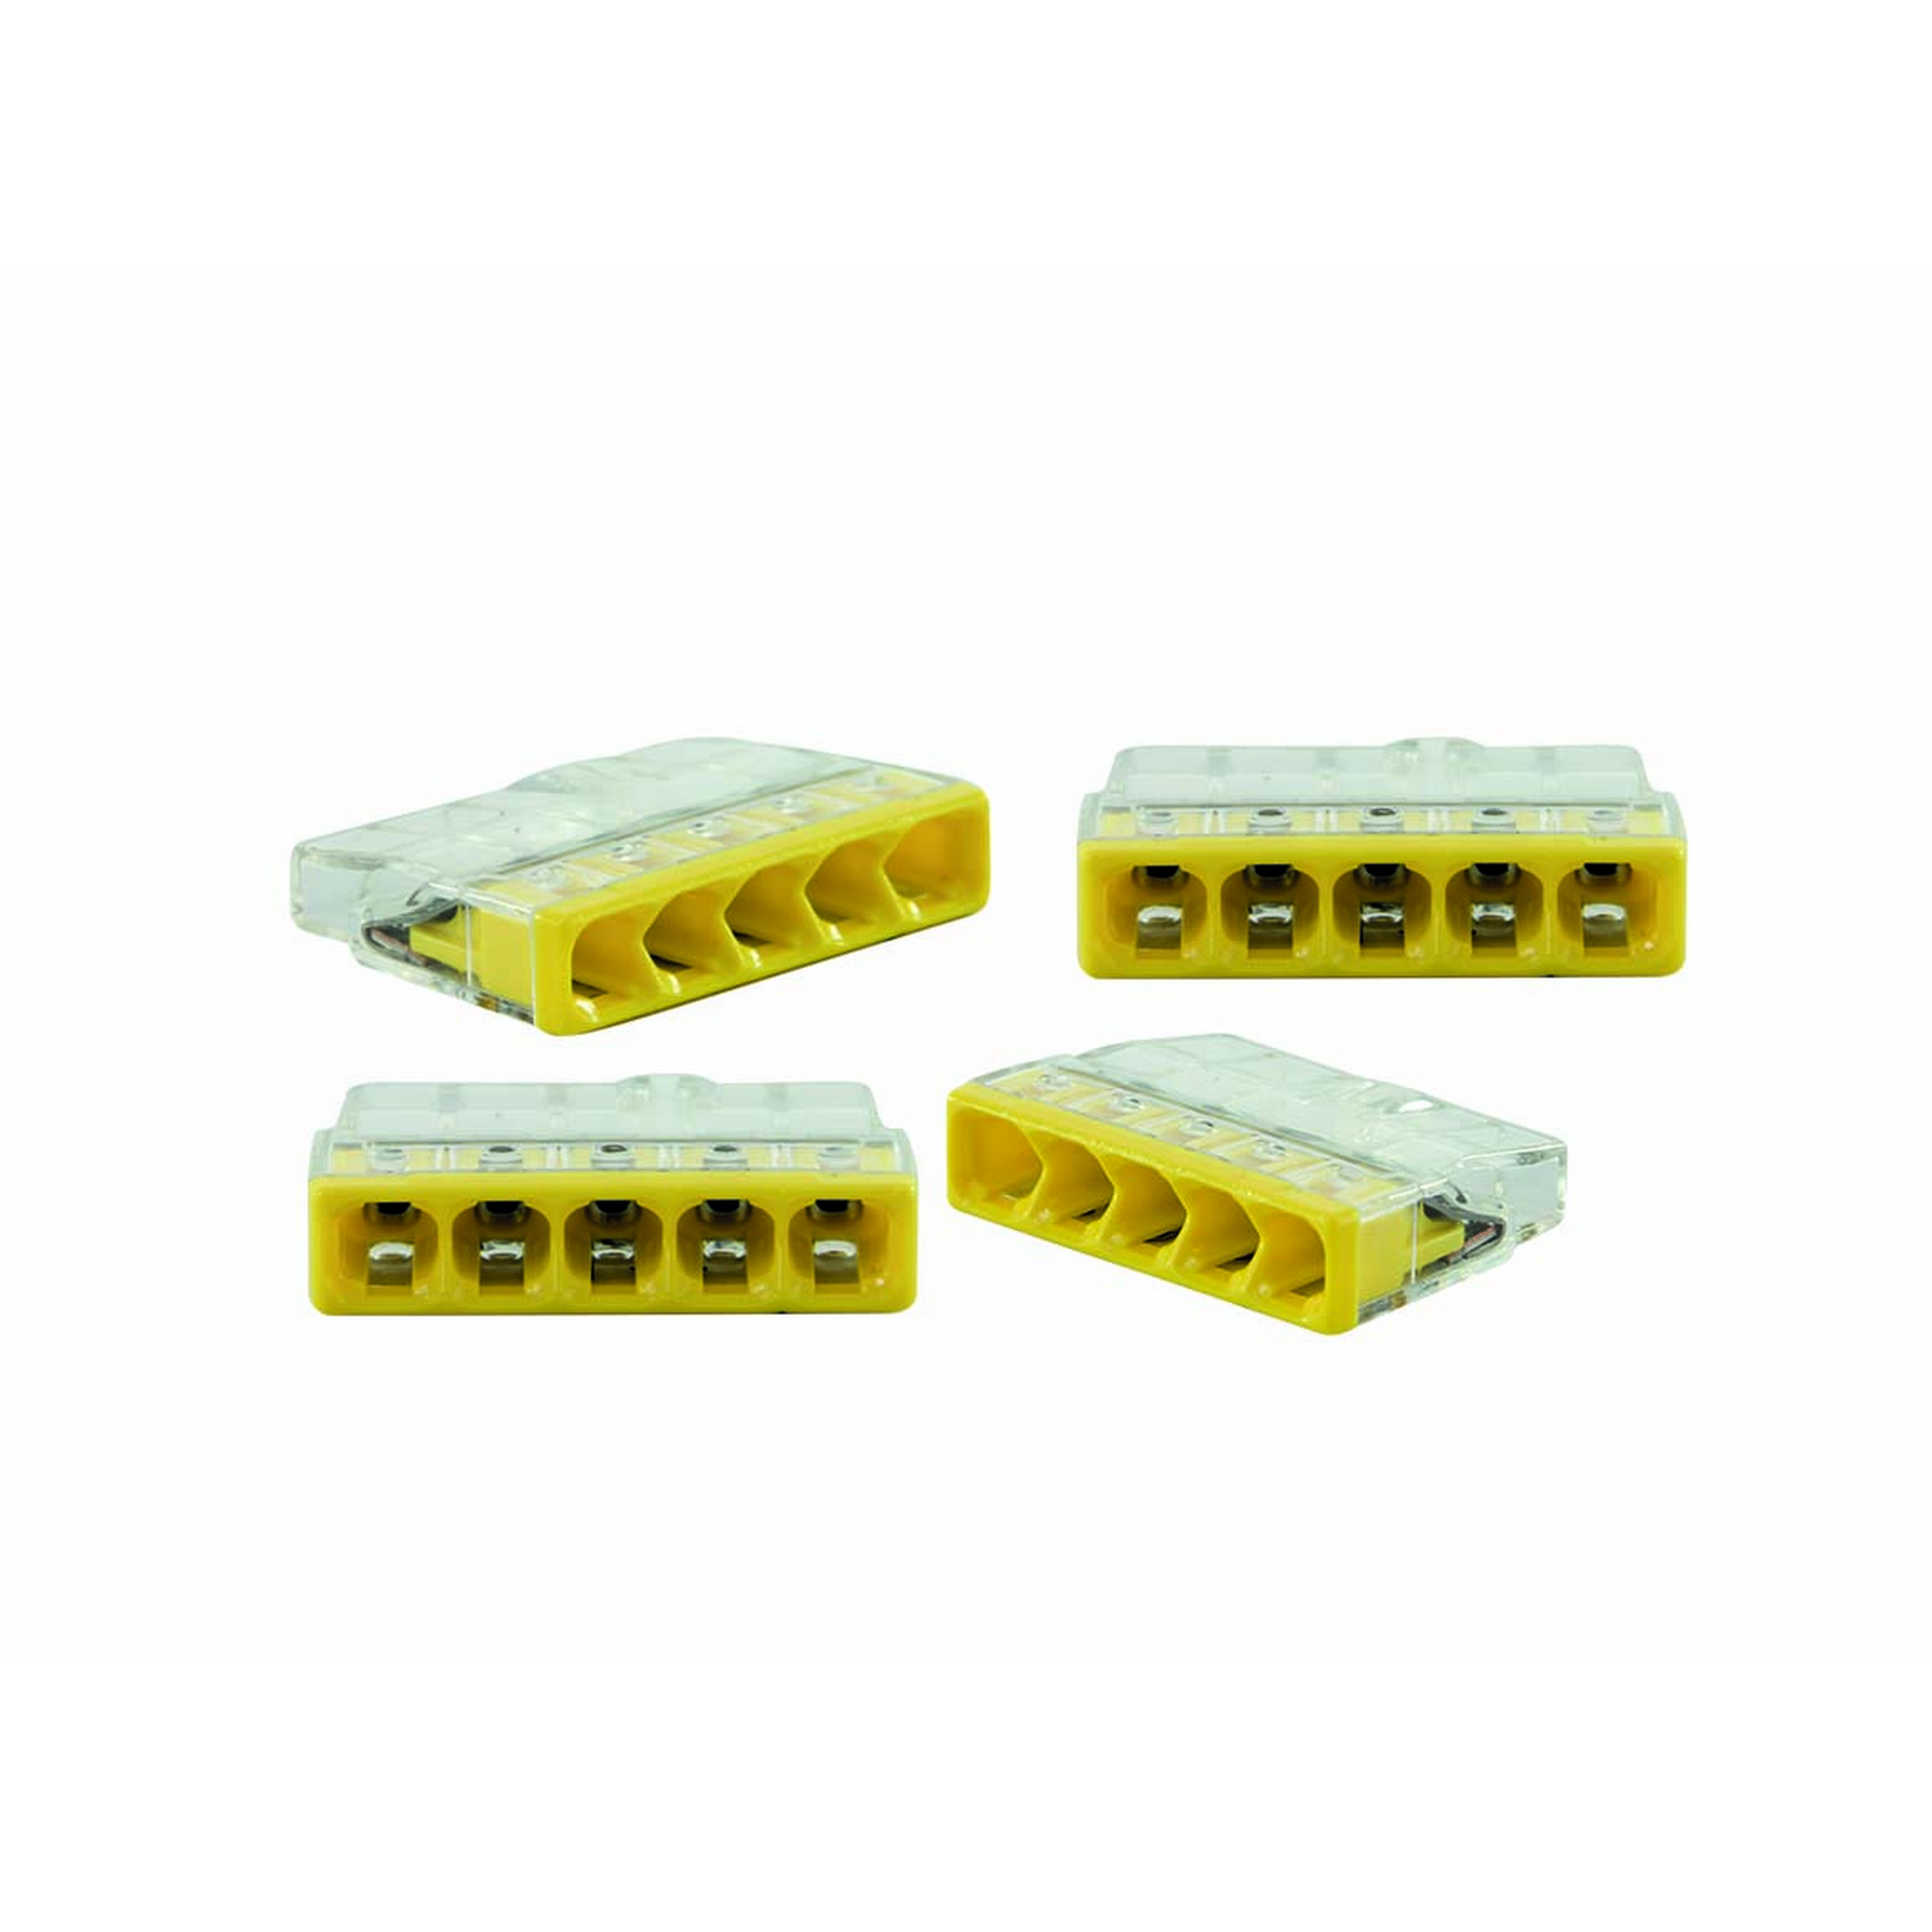 WAGO-Klemme kompakt 5-polig gelb 100 Stück + product picture